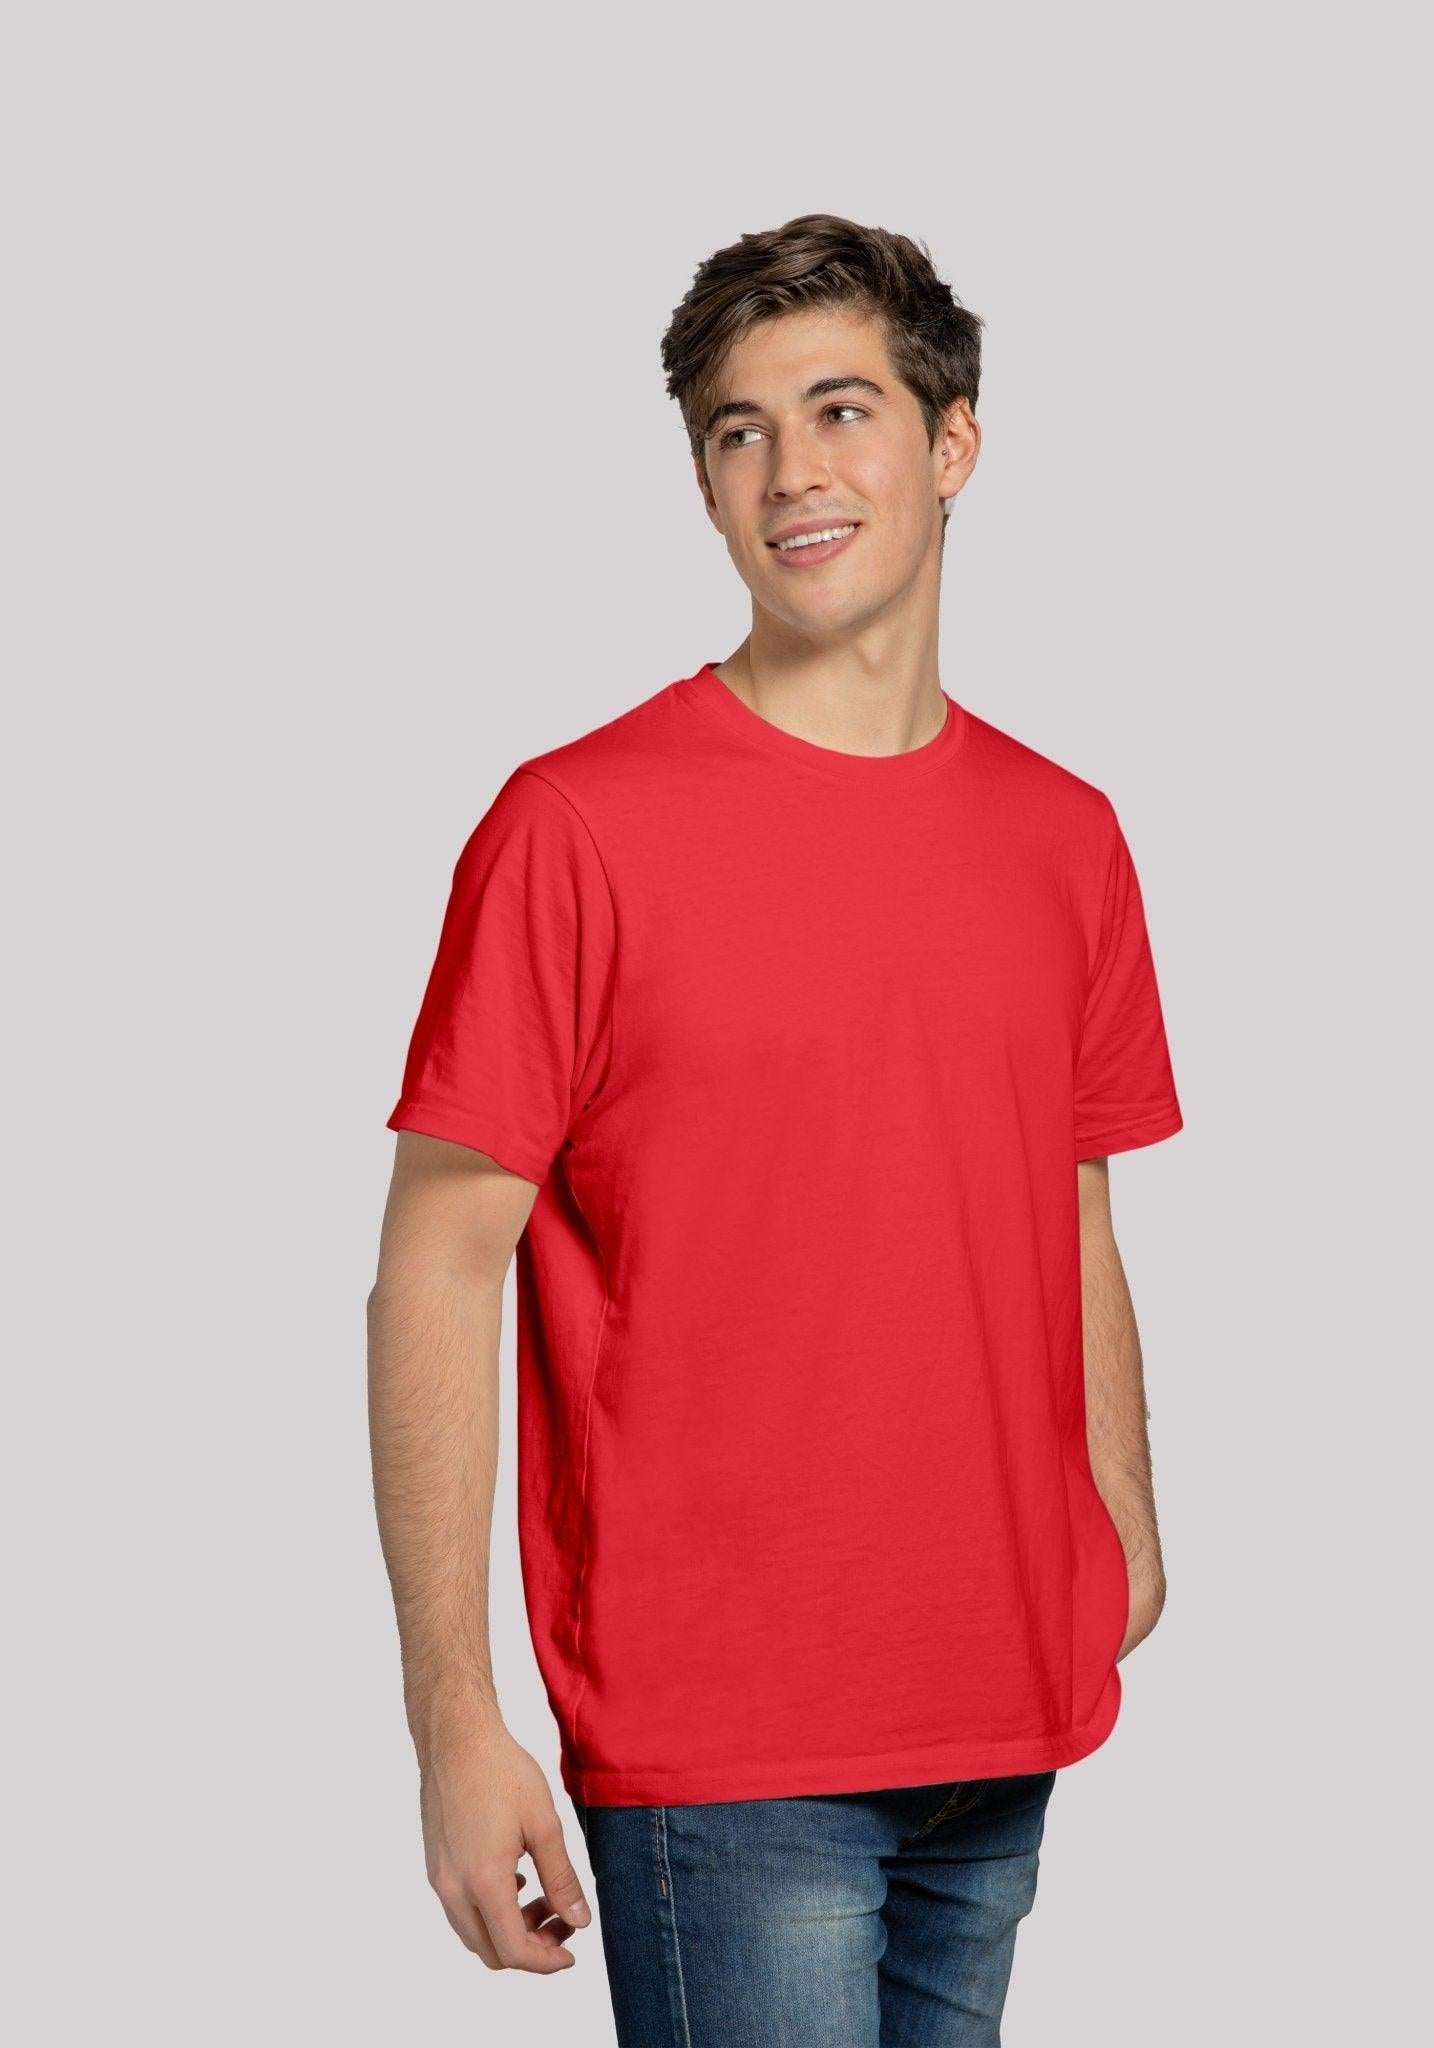 Solid Plain T Shirt For Men In Crimson Red Colour Variant